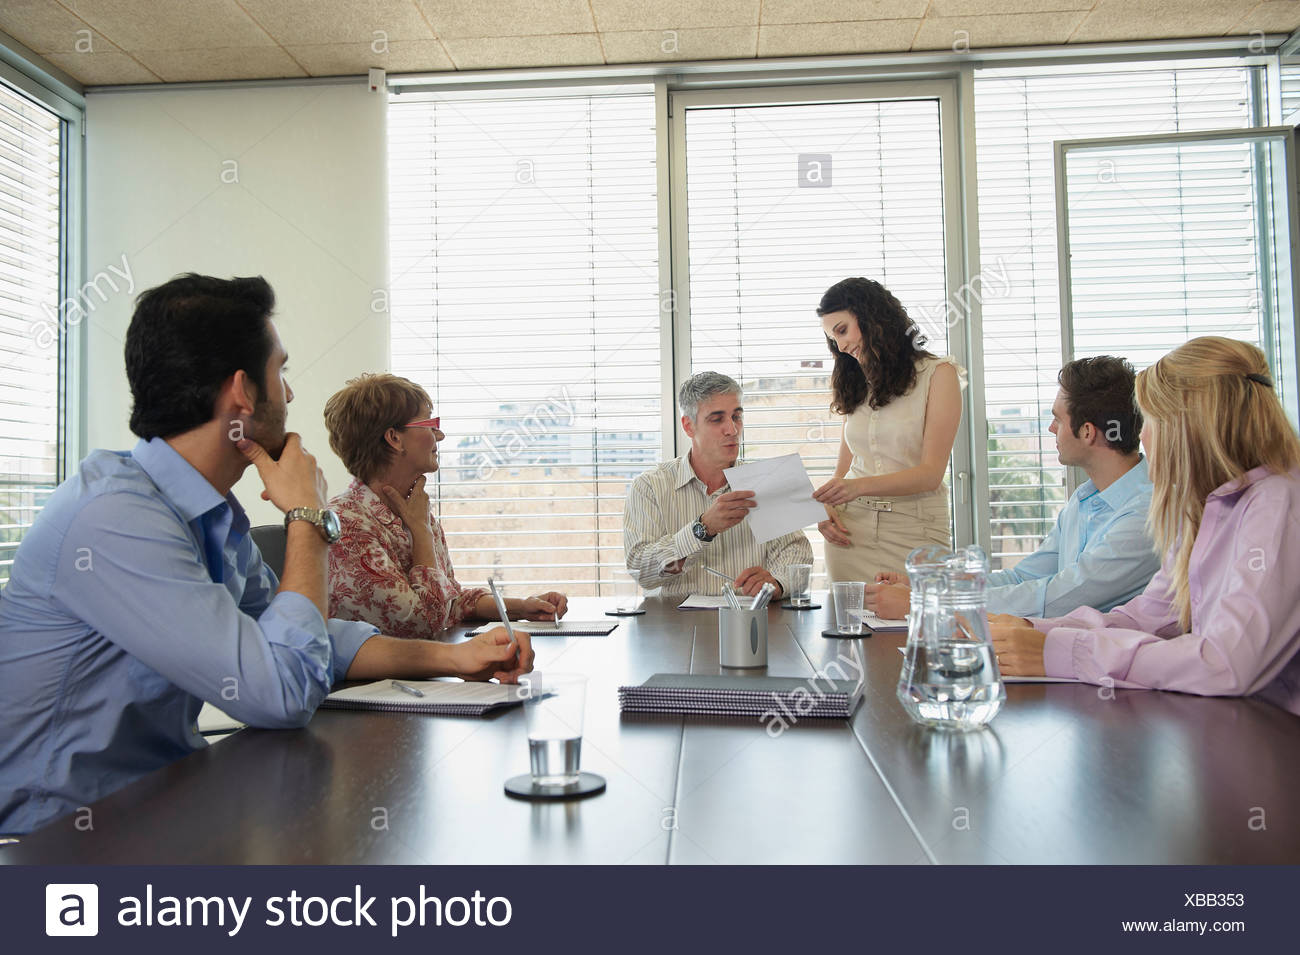 Group Of People In Boardroom Meeting Stock Photo 282371071